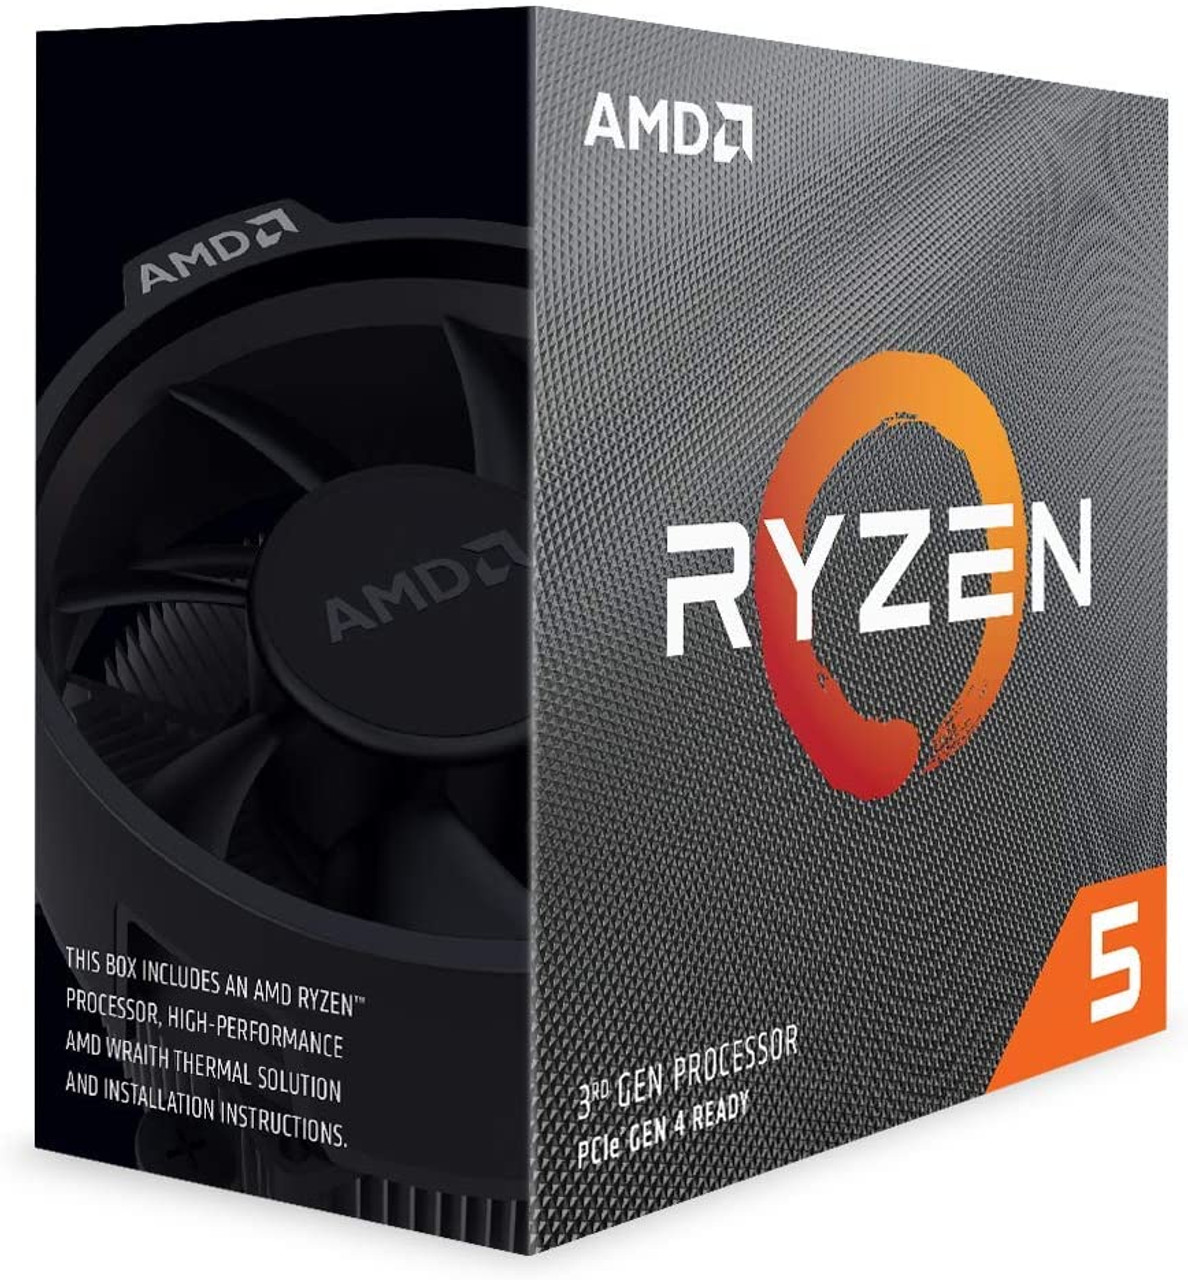 AMD 3600 Up to 4.2 GHz / Cores 12 Threads / AM4 / Desktop Processor